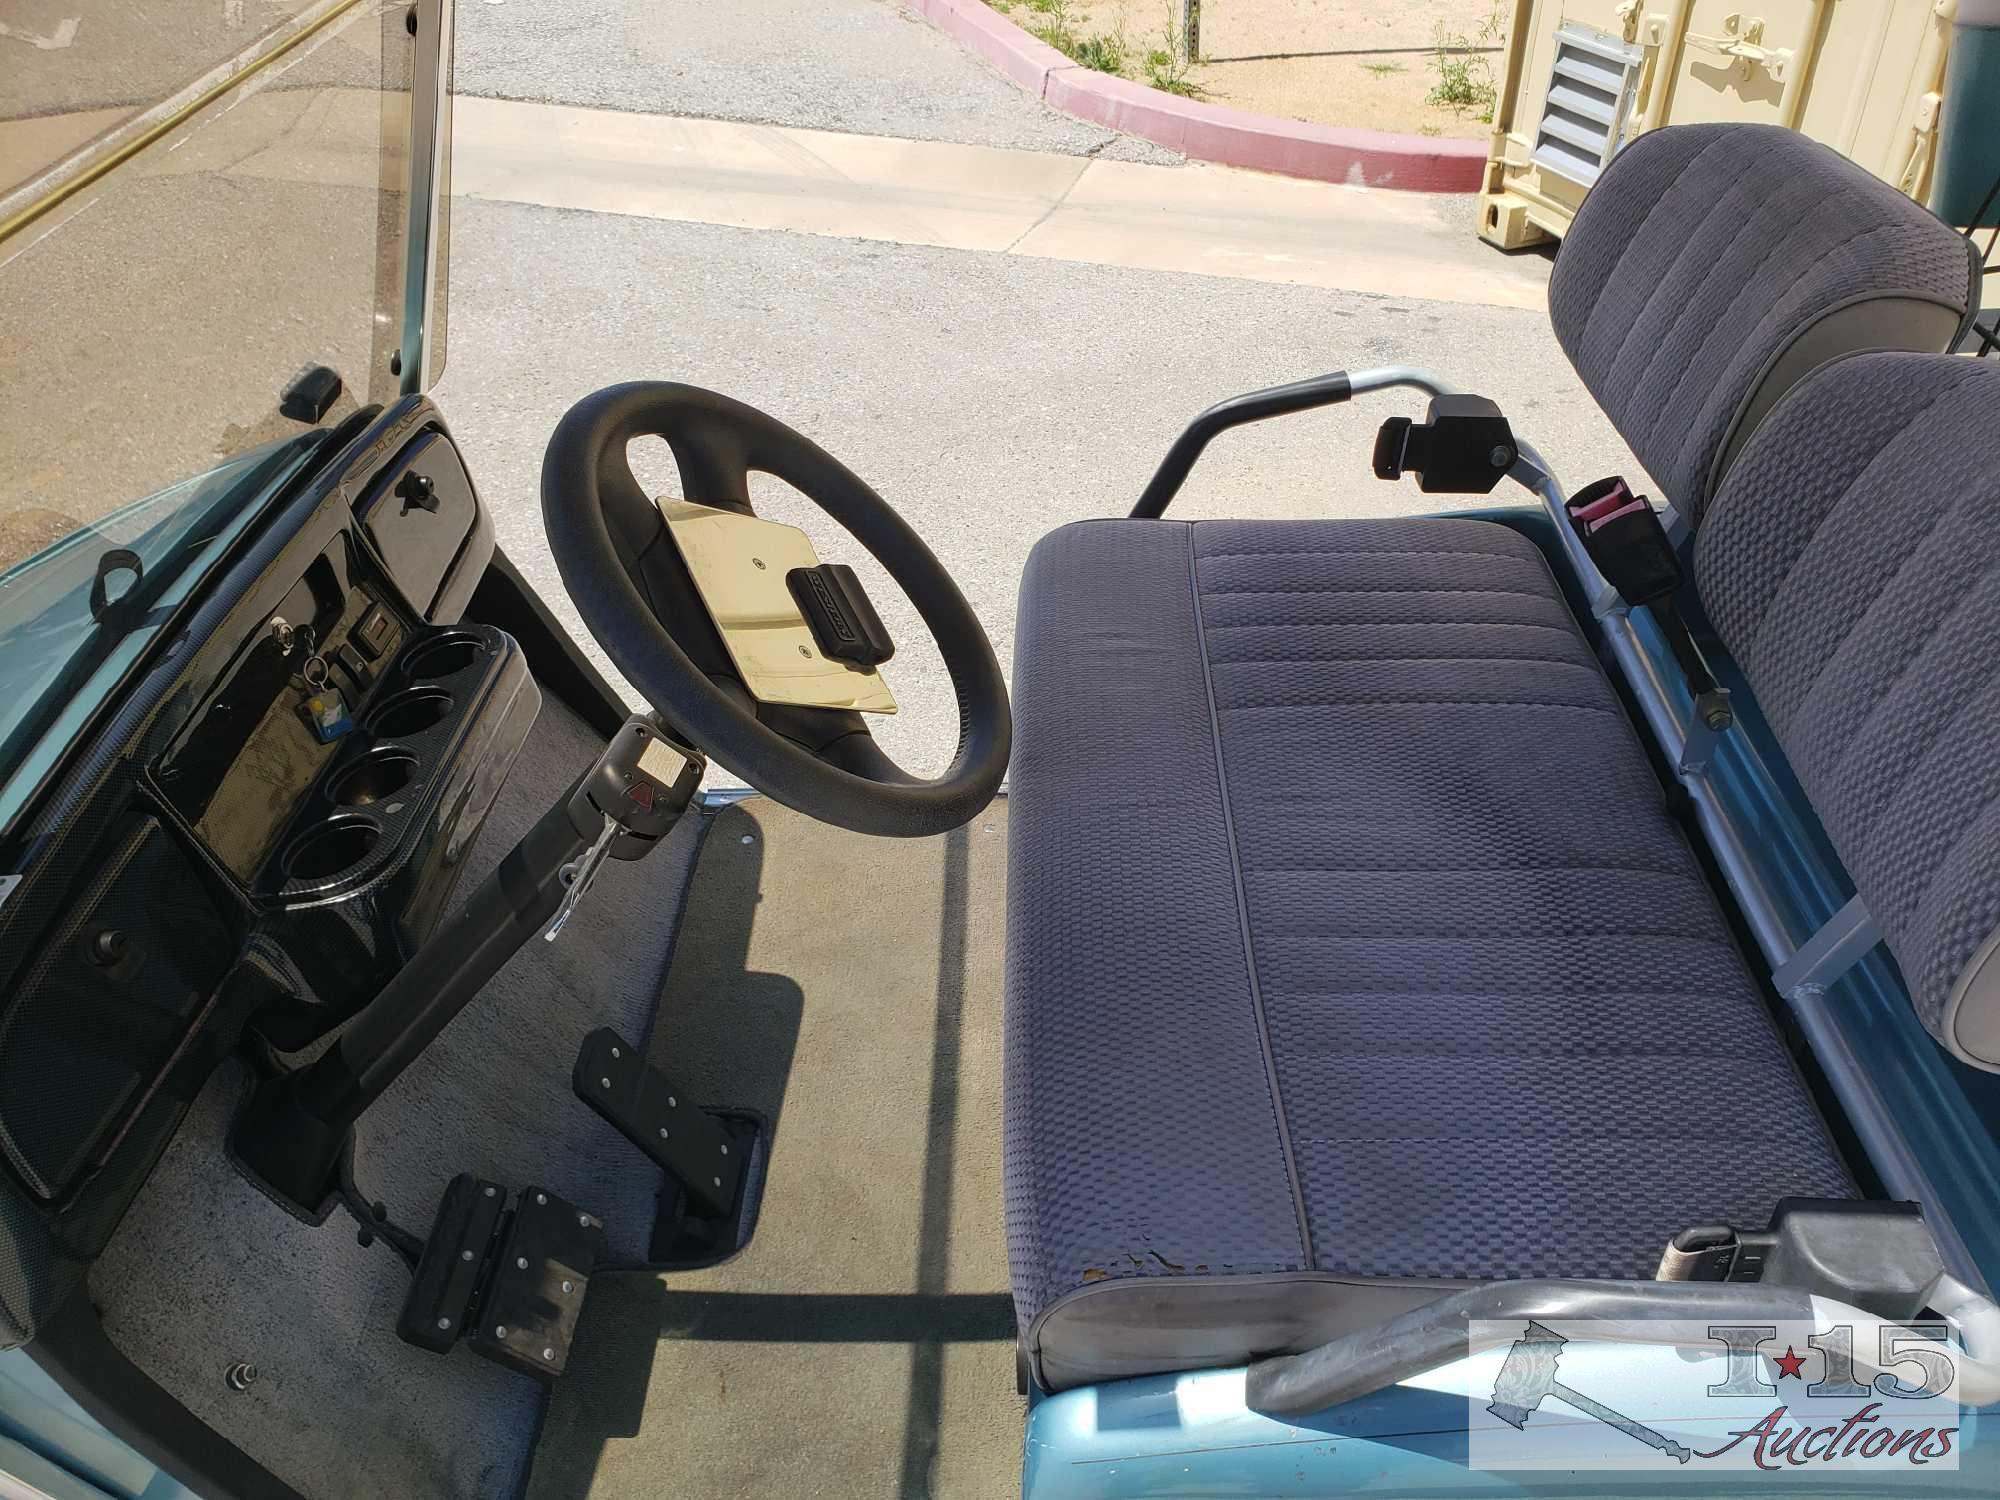 2005 Western Electric Golf Cart